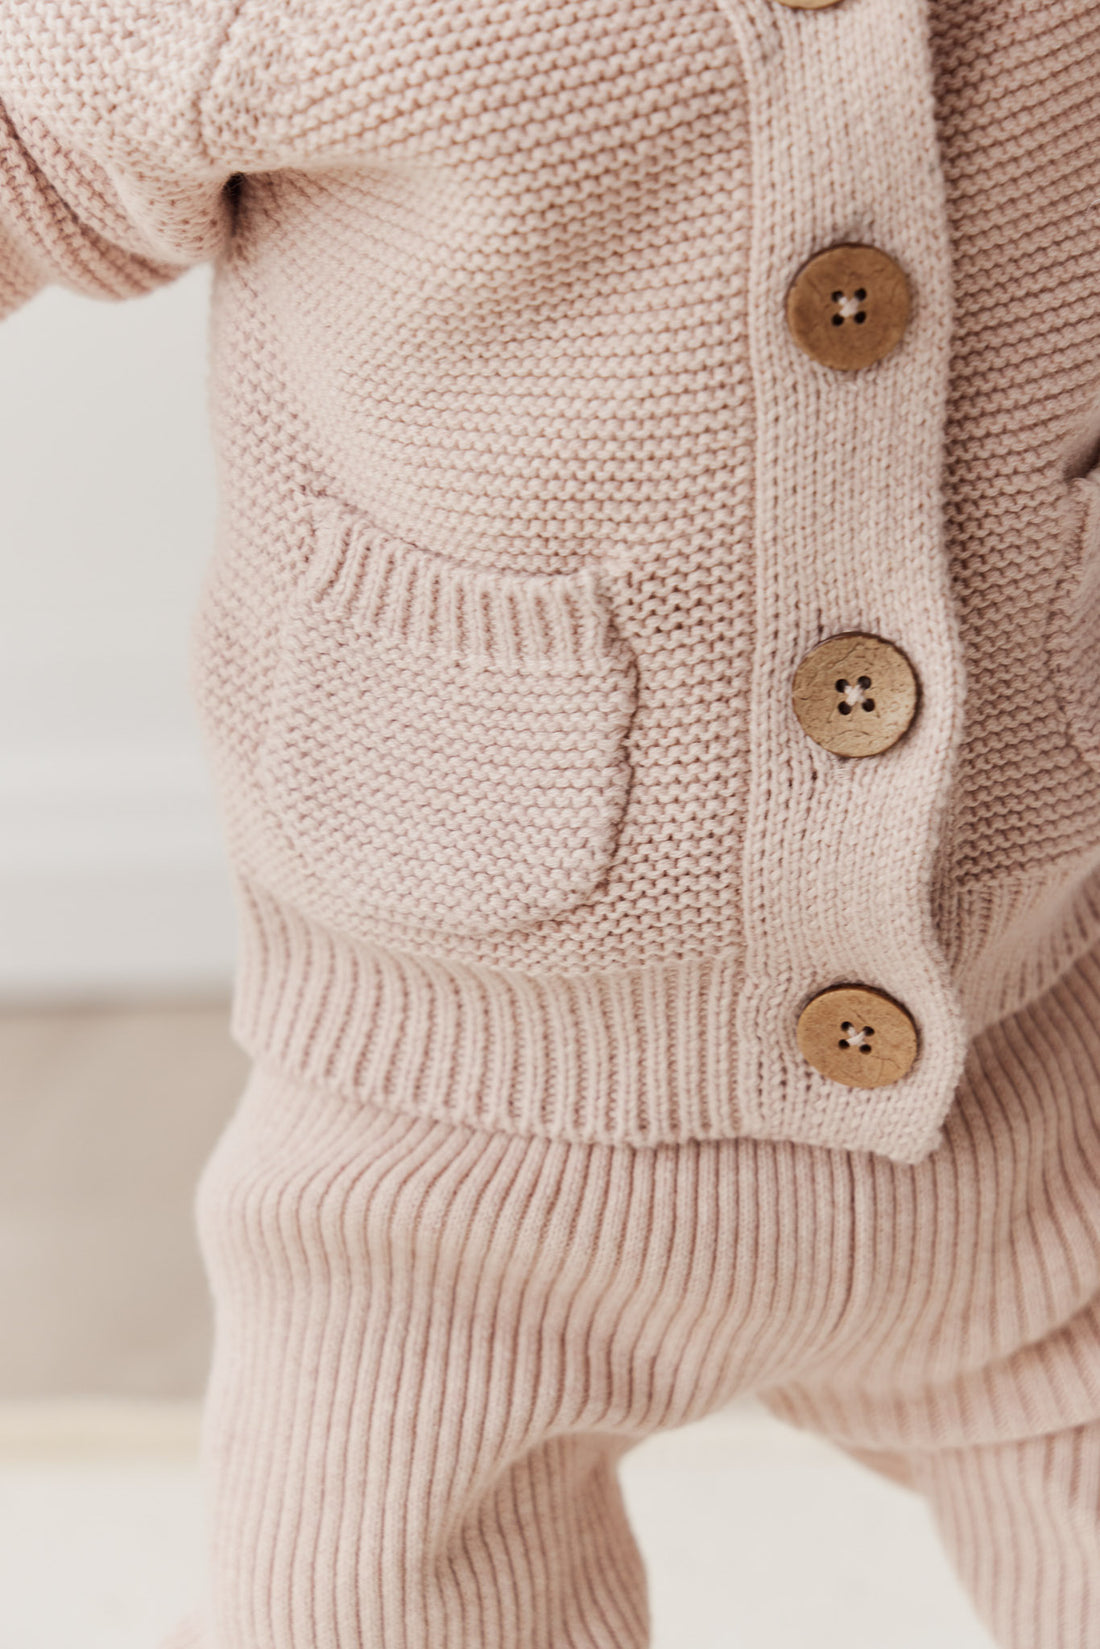 Sebastian Knitted Cardigan/Jacket - Ballet Pink Marle Childrens Cardigan from Jamie Kay NZ